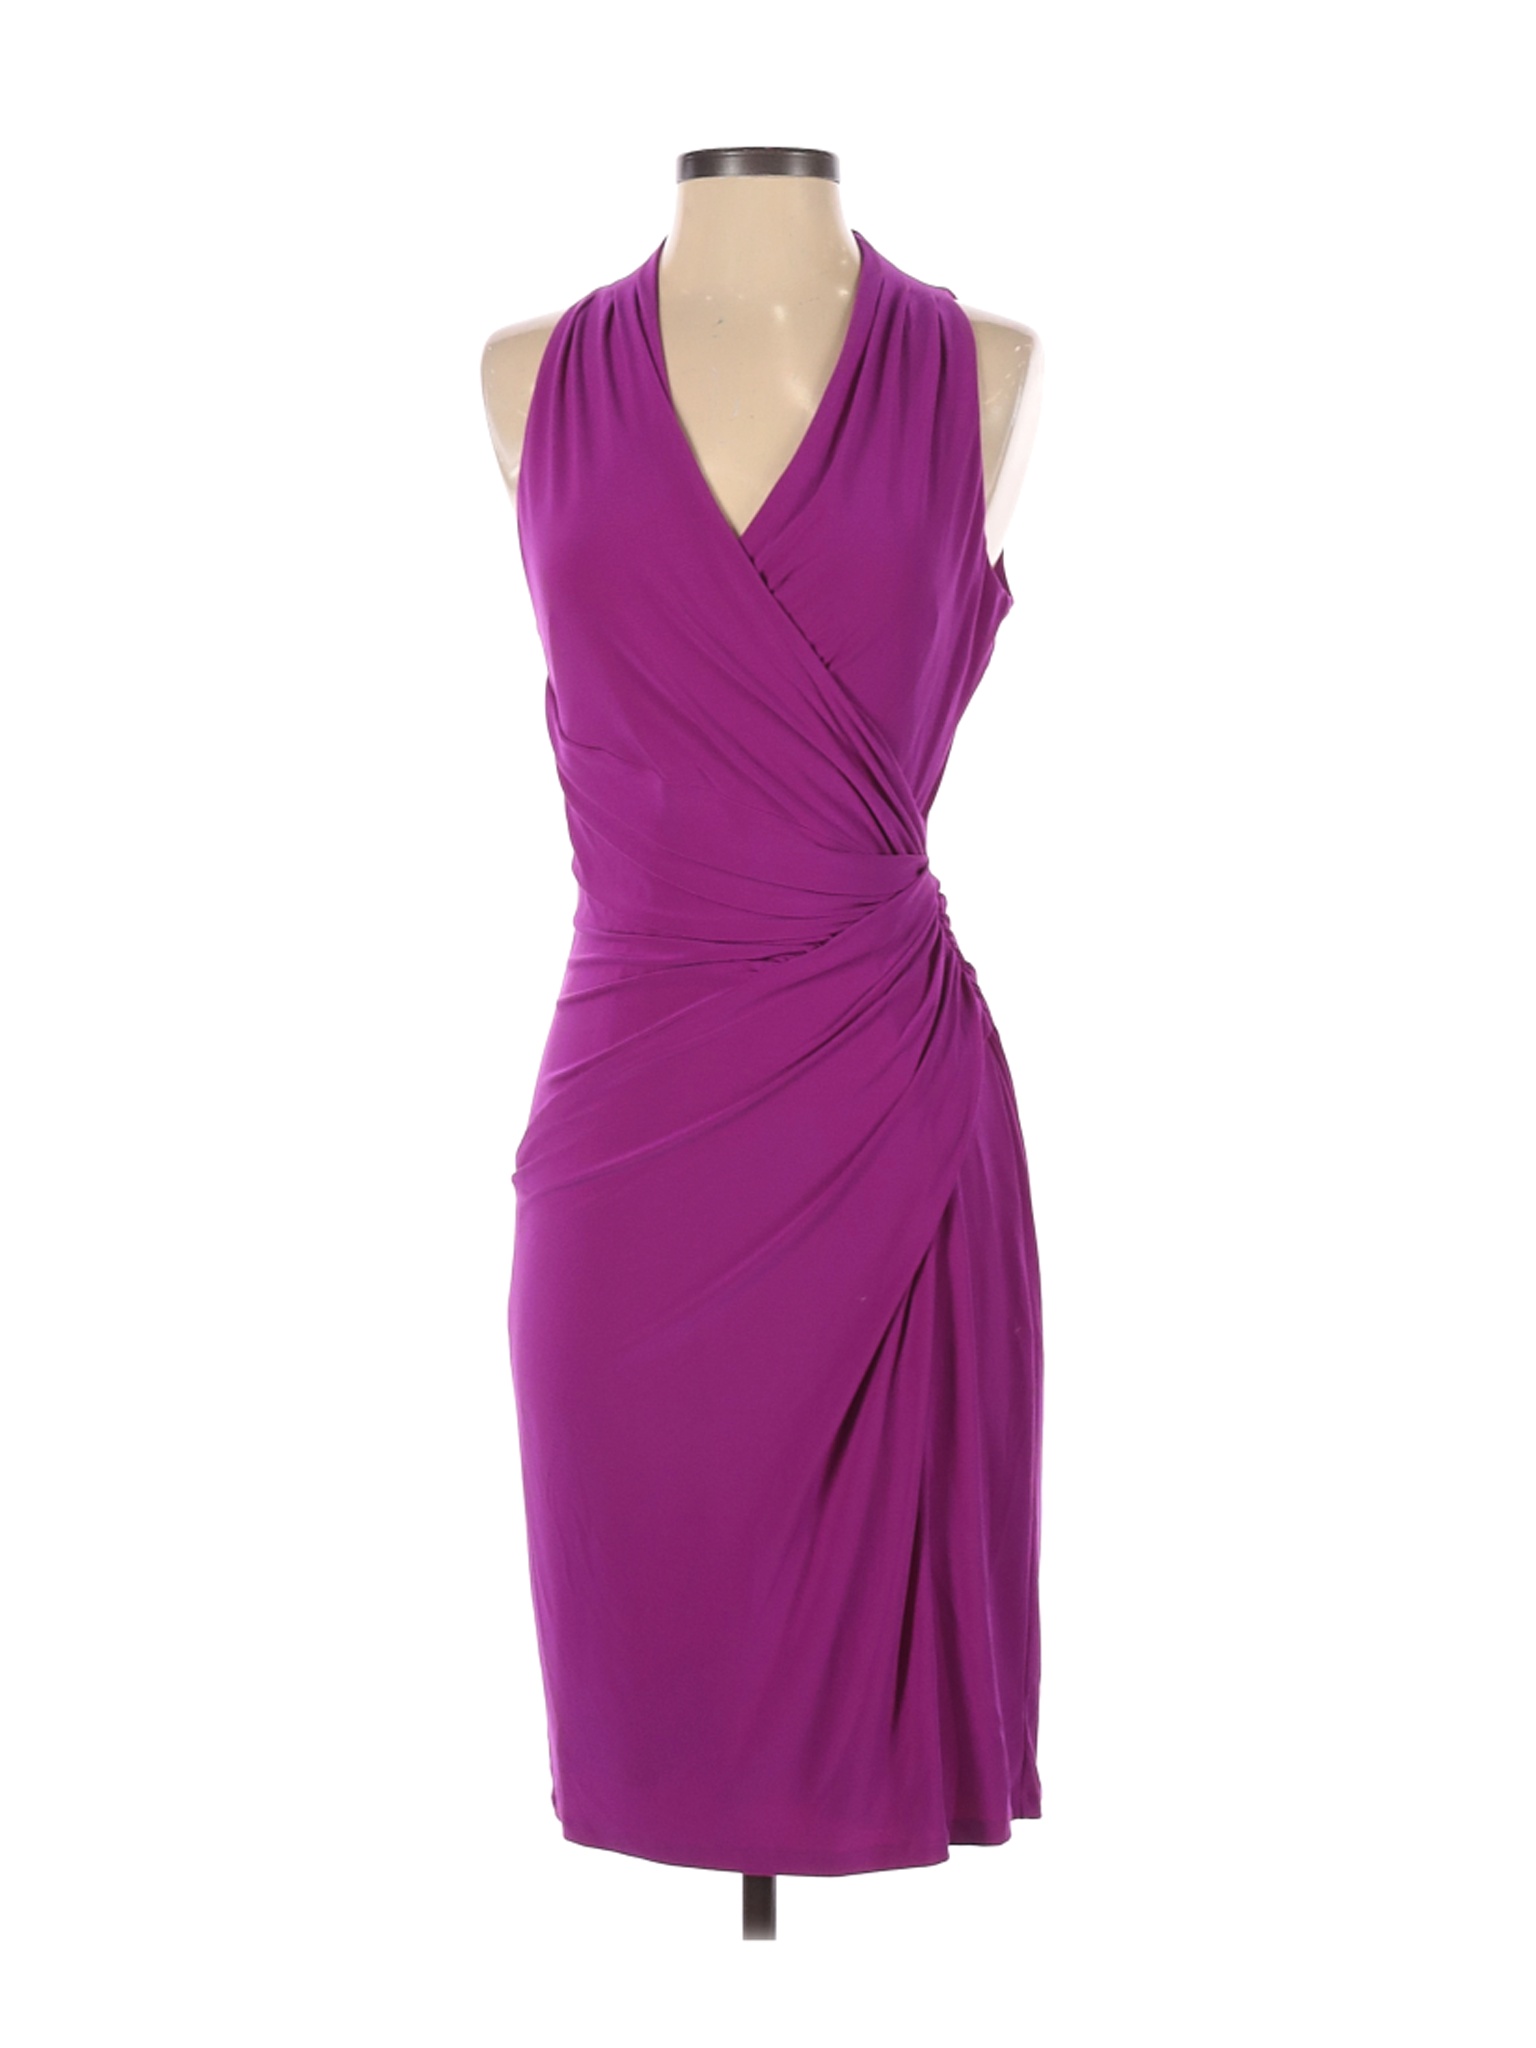 Lauren by Ralph Lauren Women Purple Cocktail Dress 4 | eBay